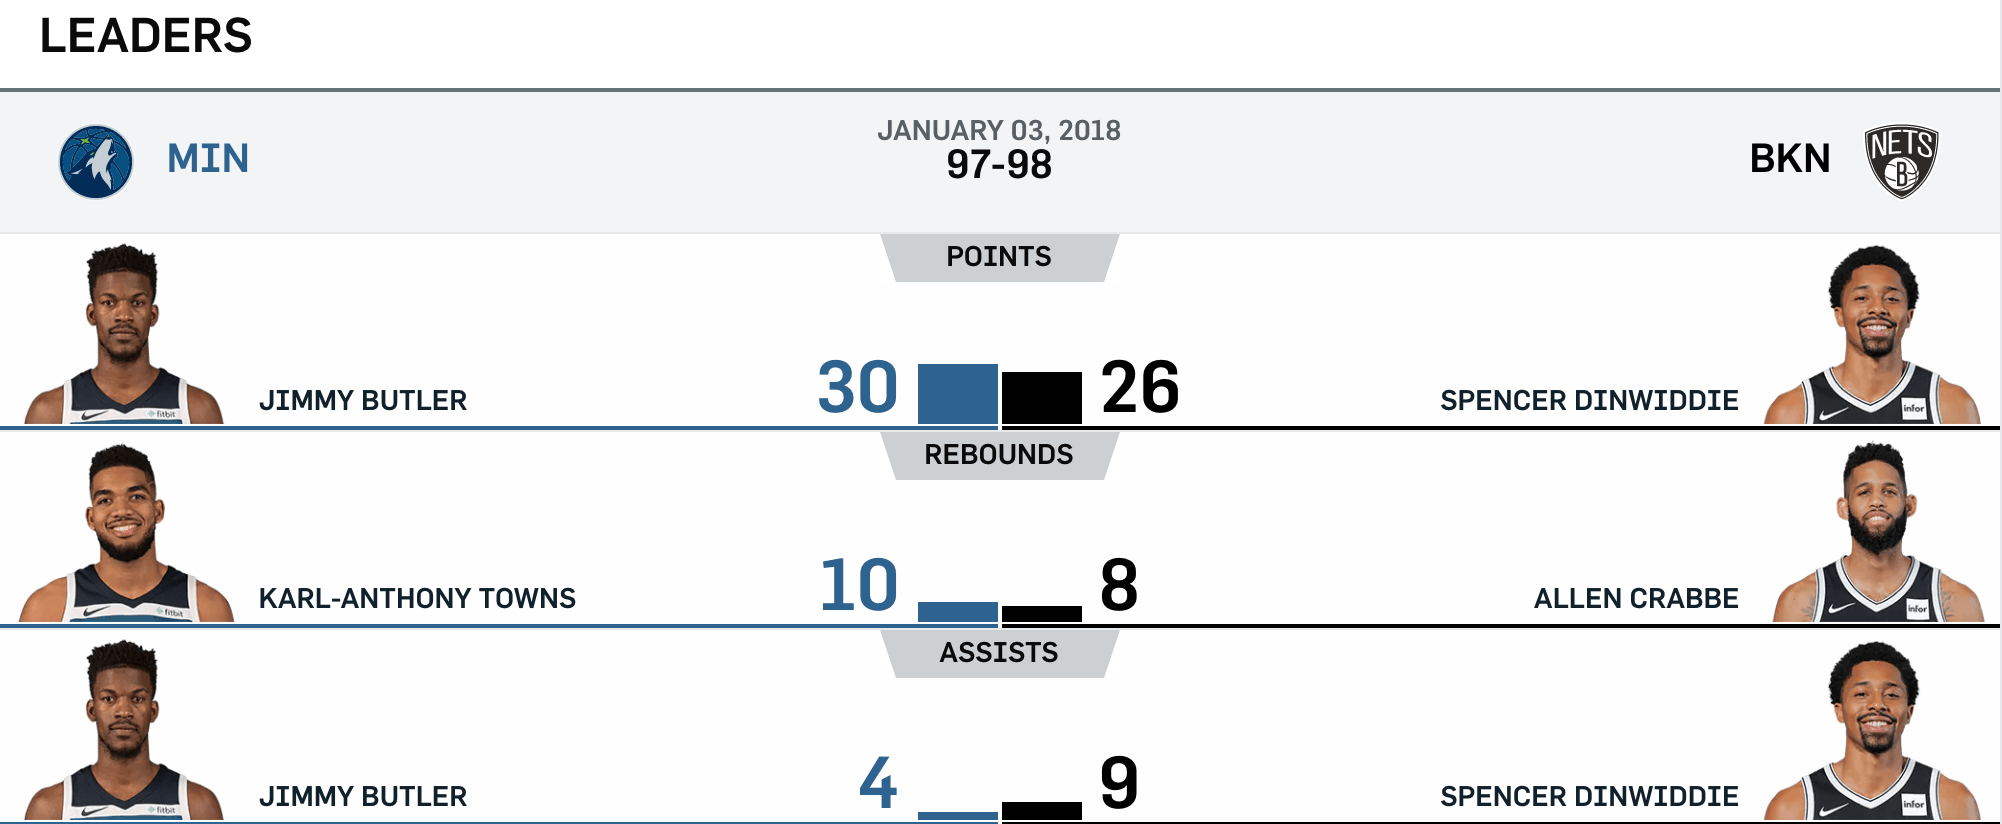 Brooklyn Nets vs Minnesota Timberwolves 1-3-18 Leaders